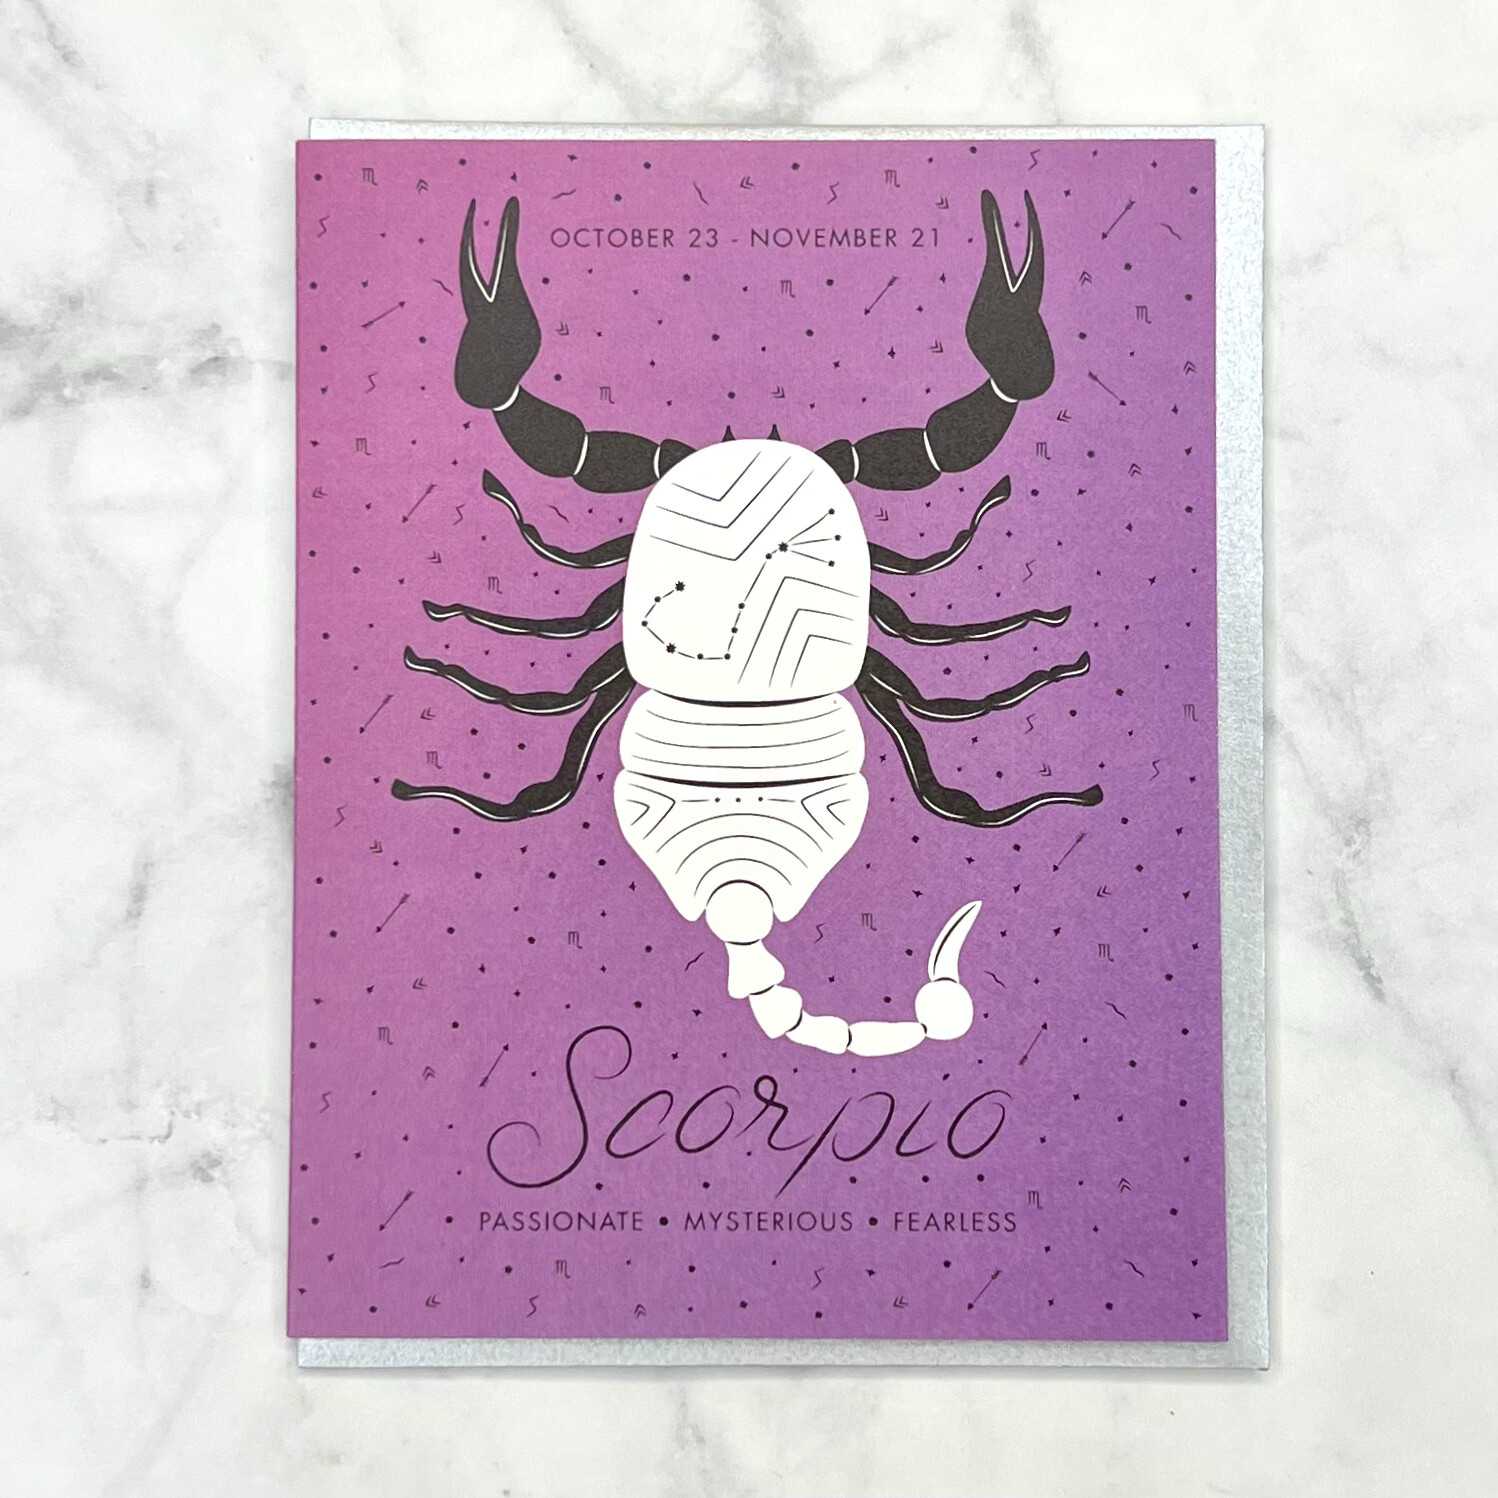 Scorpio card